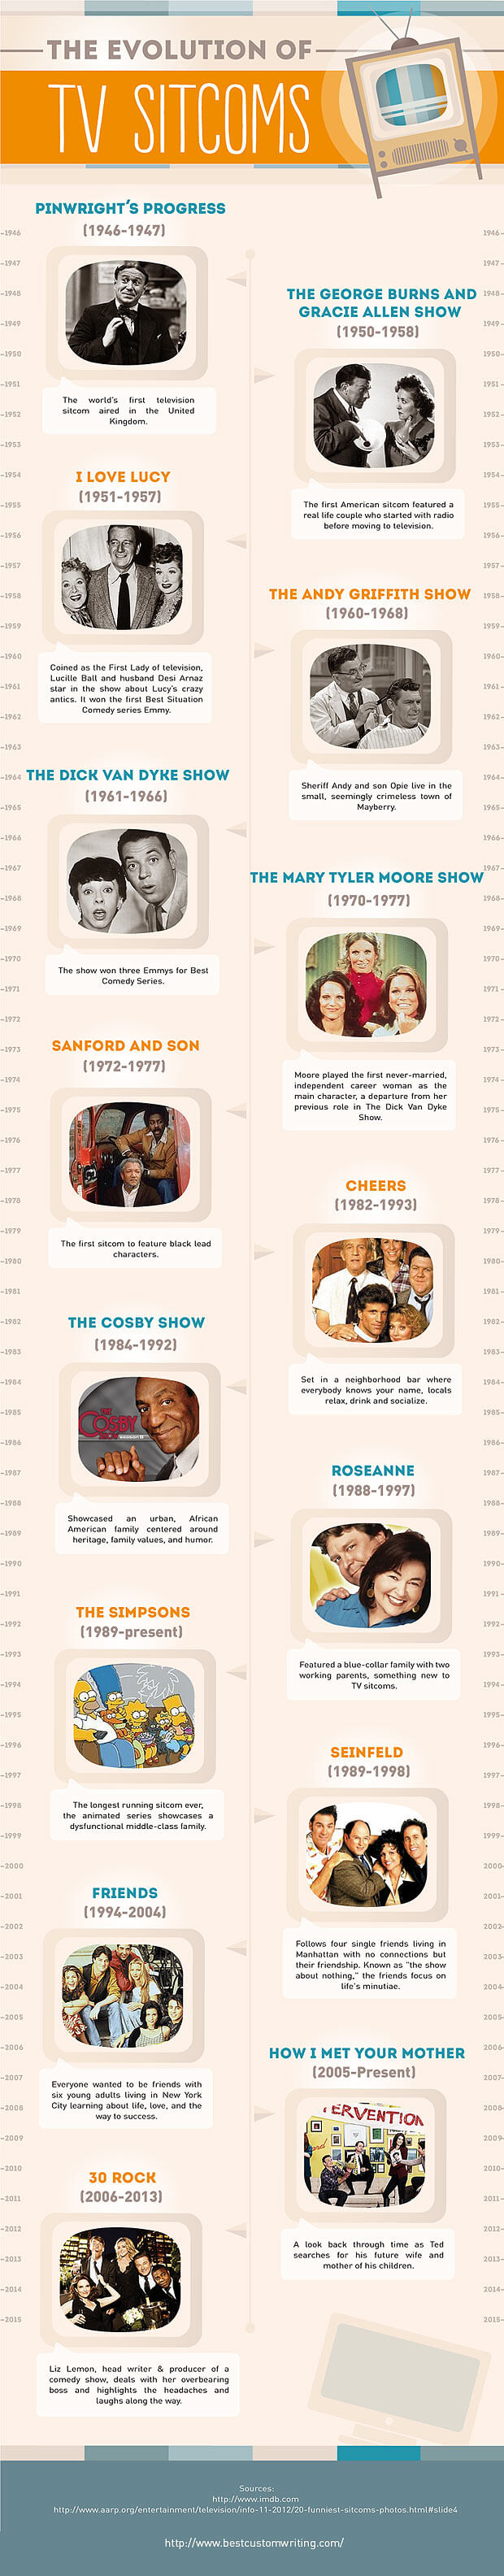  The evolution of TV sitcoms 